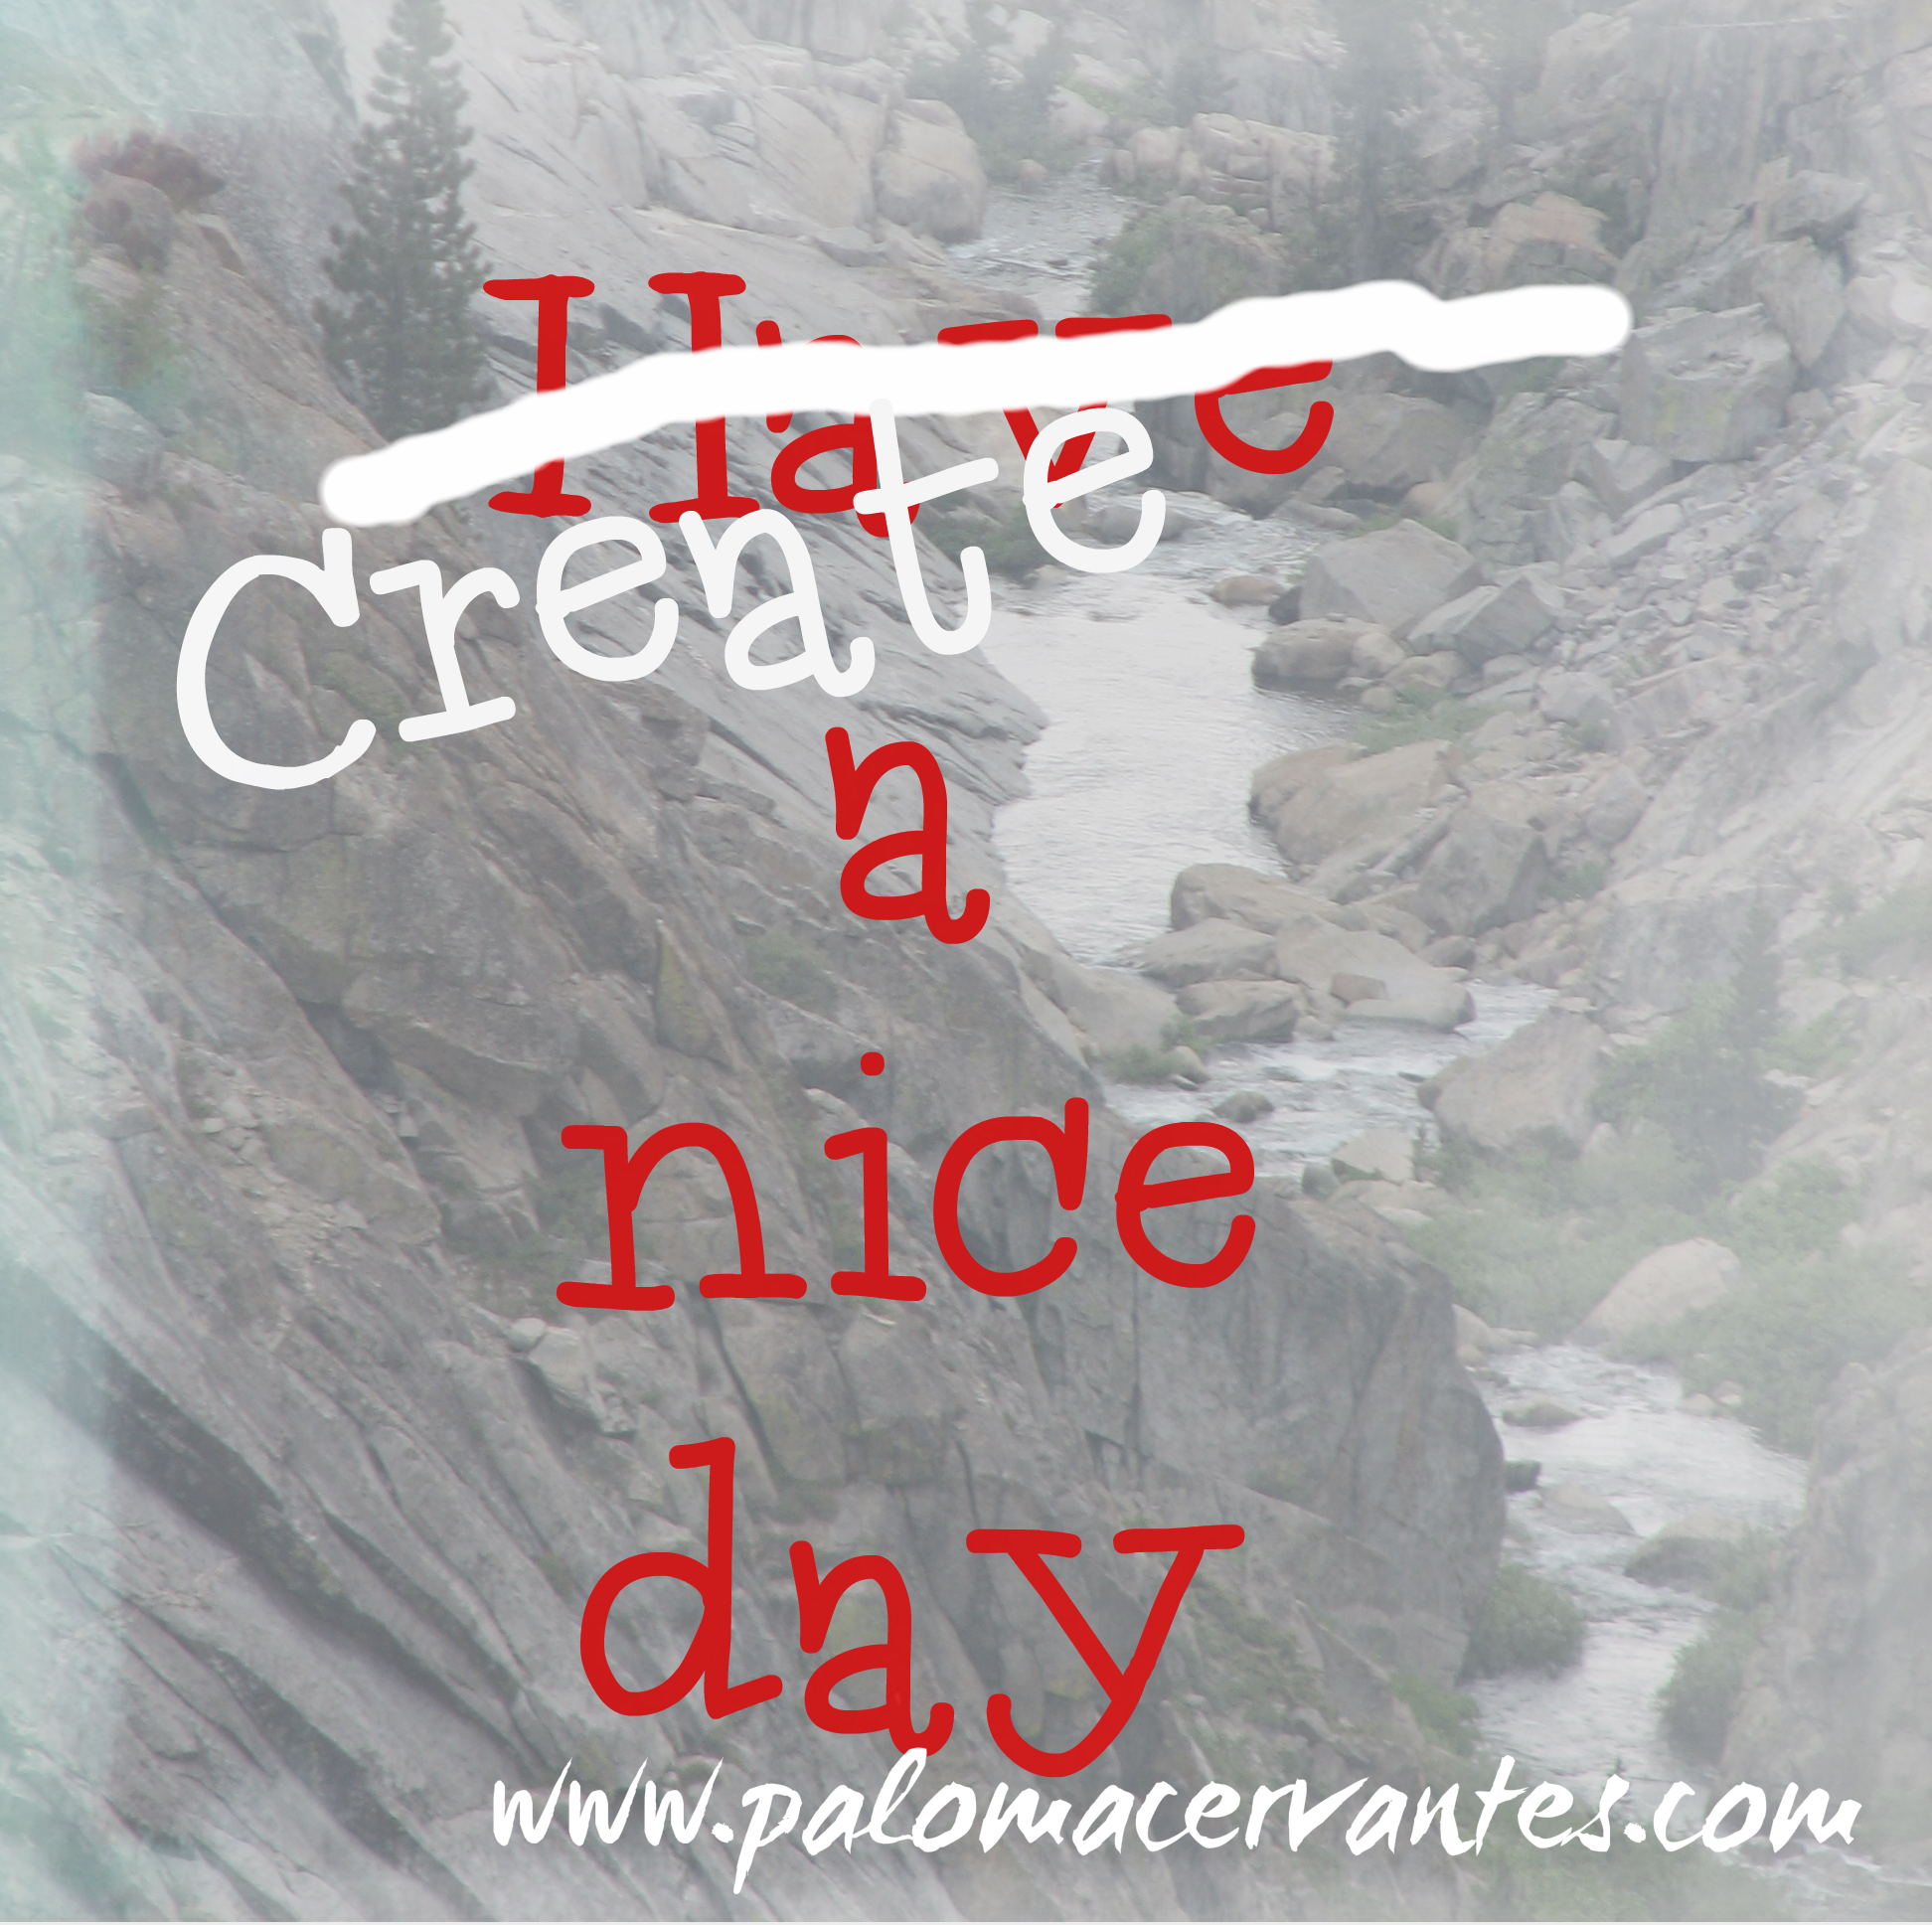 Create a nice day Paloma Cervantes